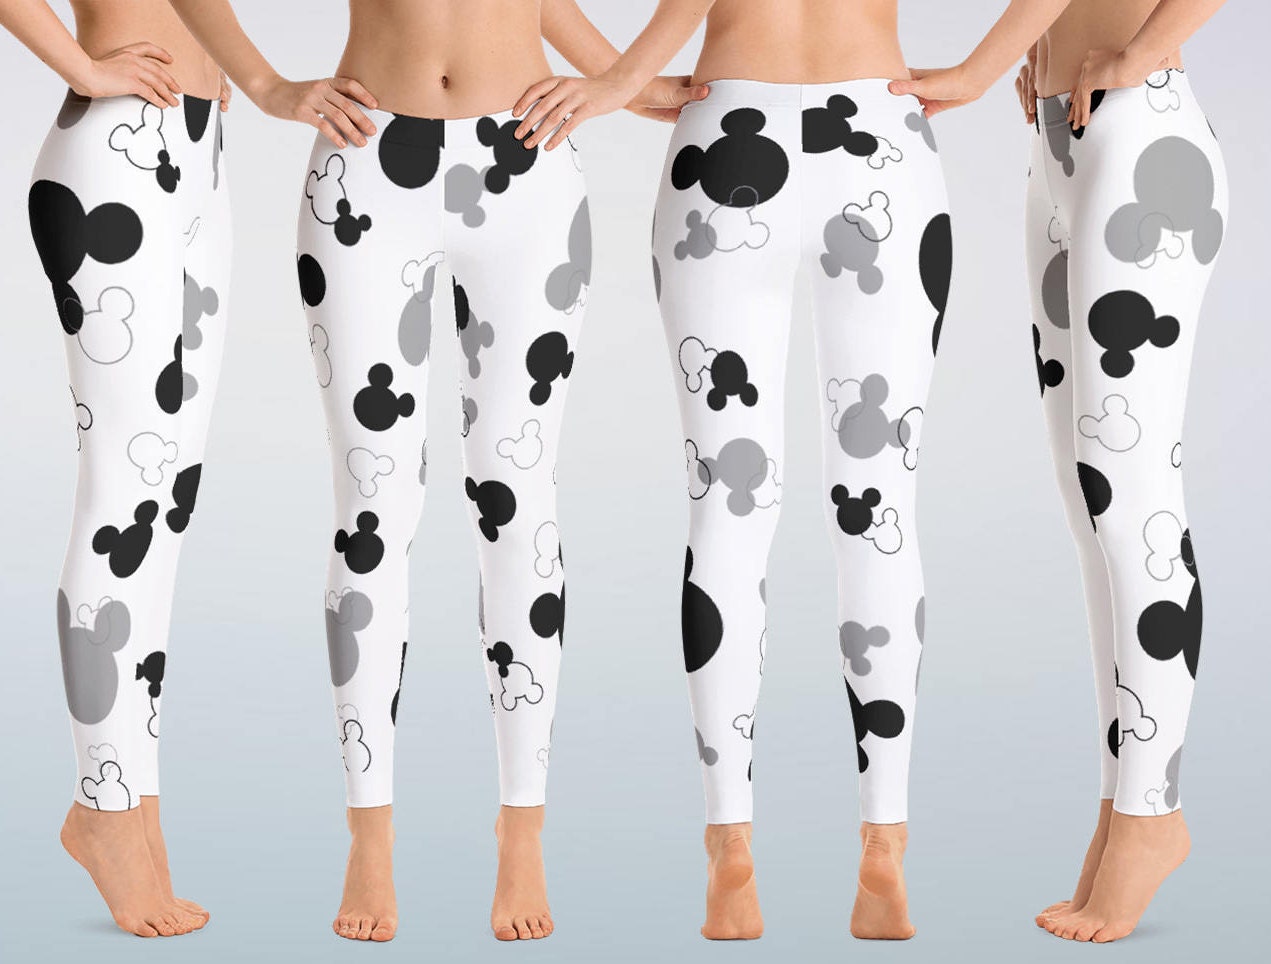 babyGap | Disney Cotton Mickey Mouse Leggings